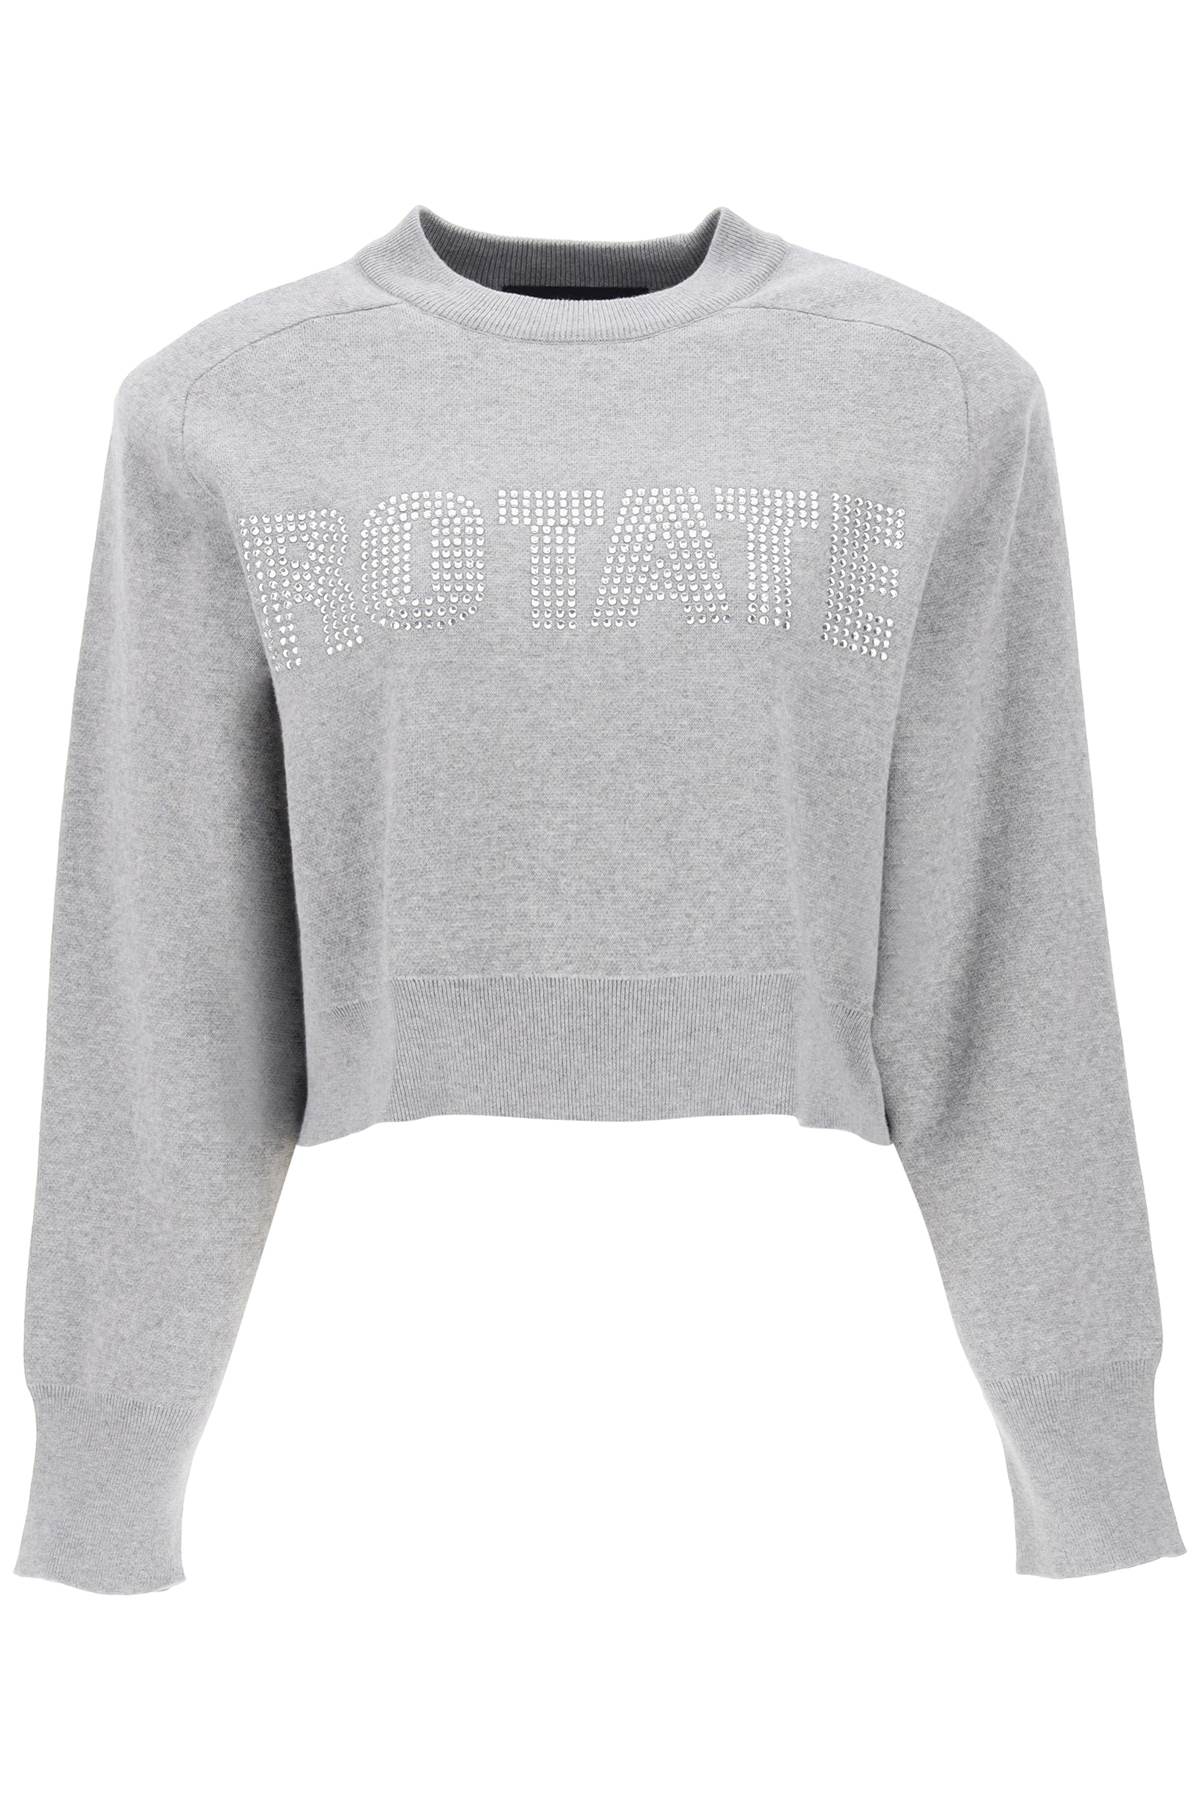 Cropped Sweater With Rhinestone-Studded Logo